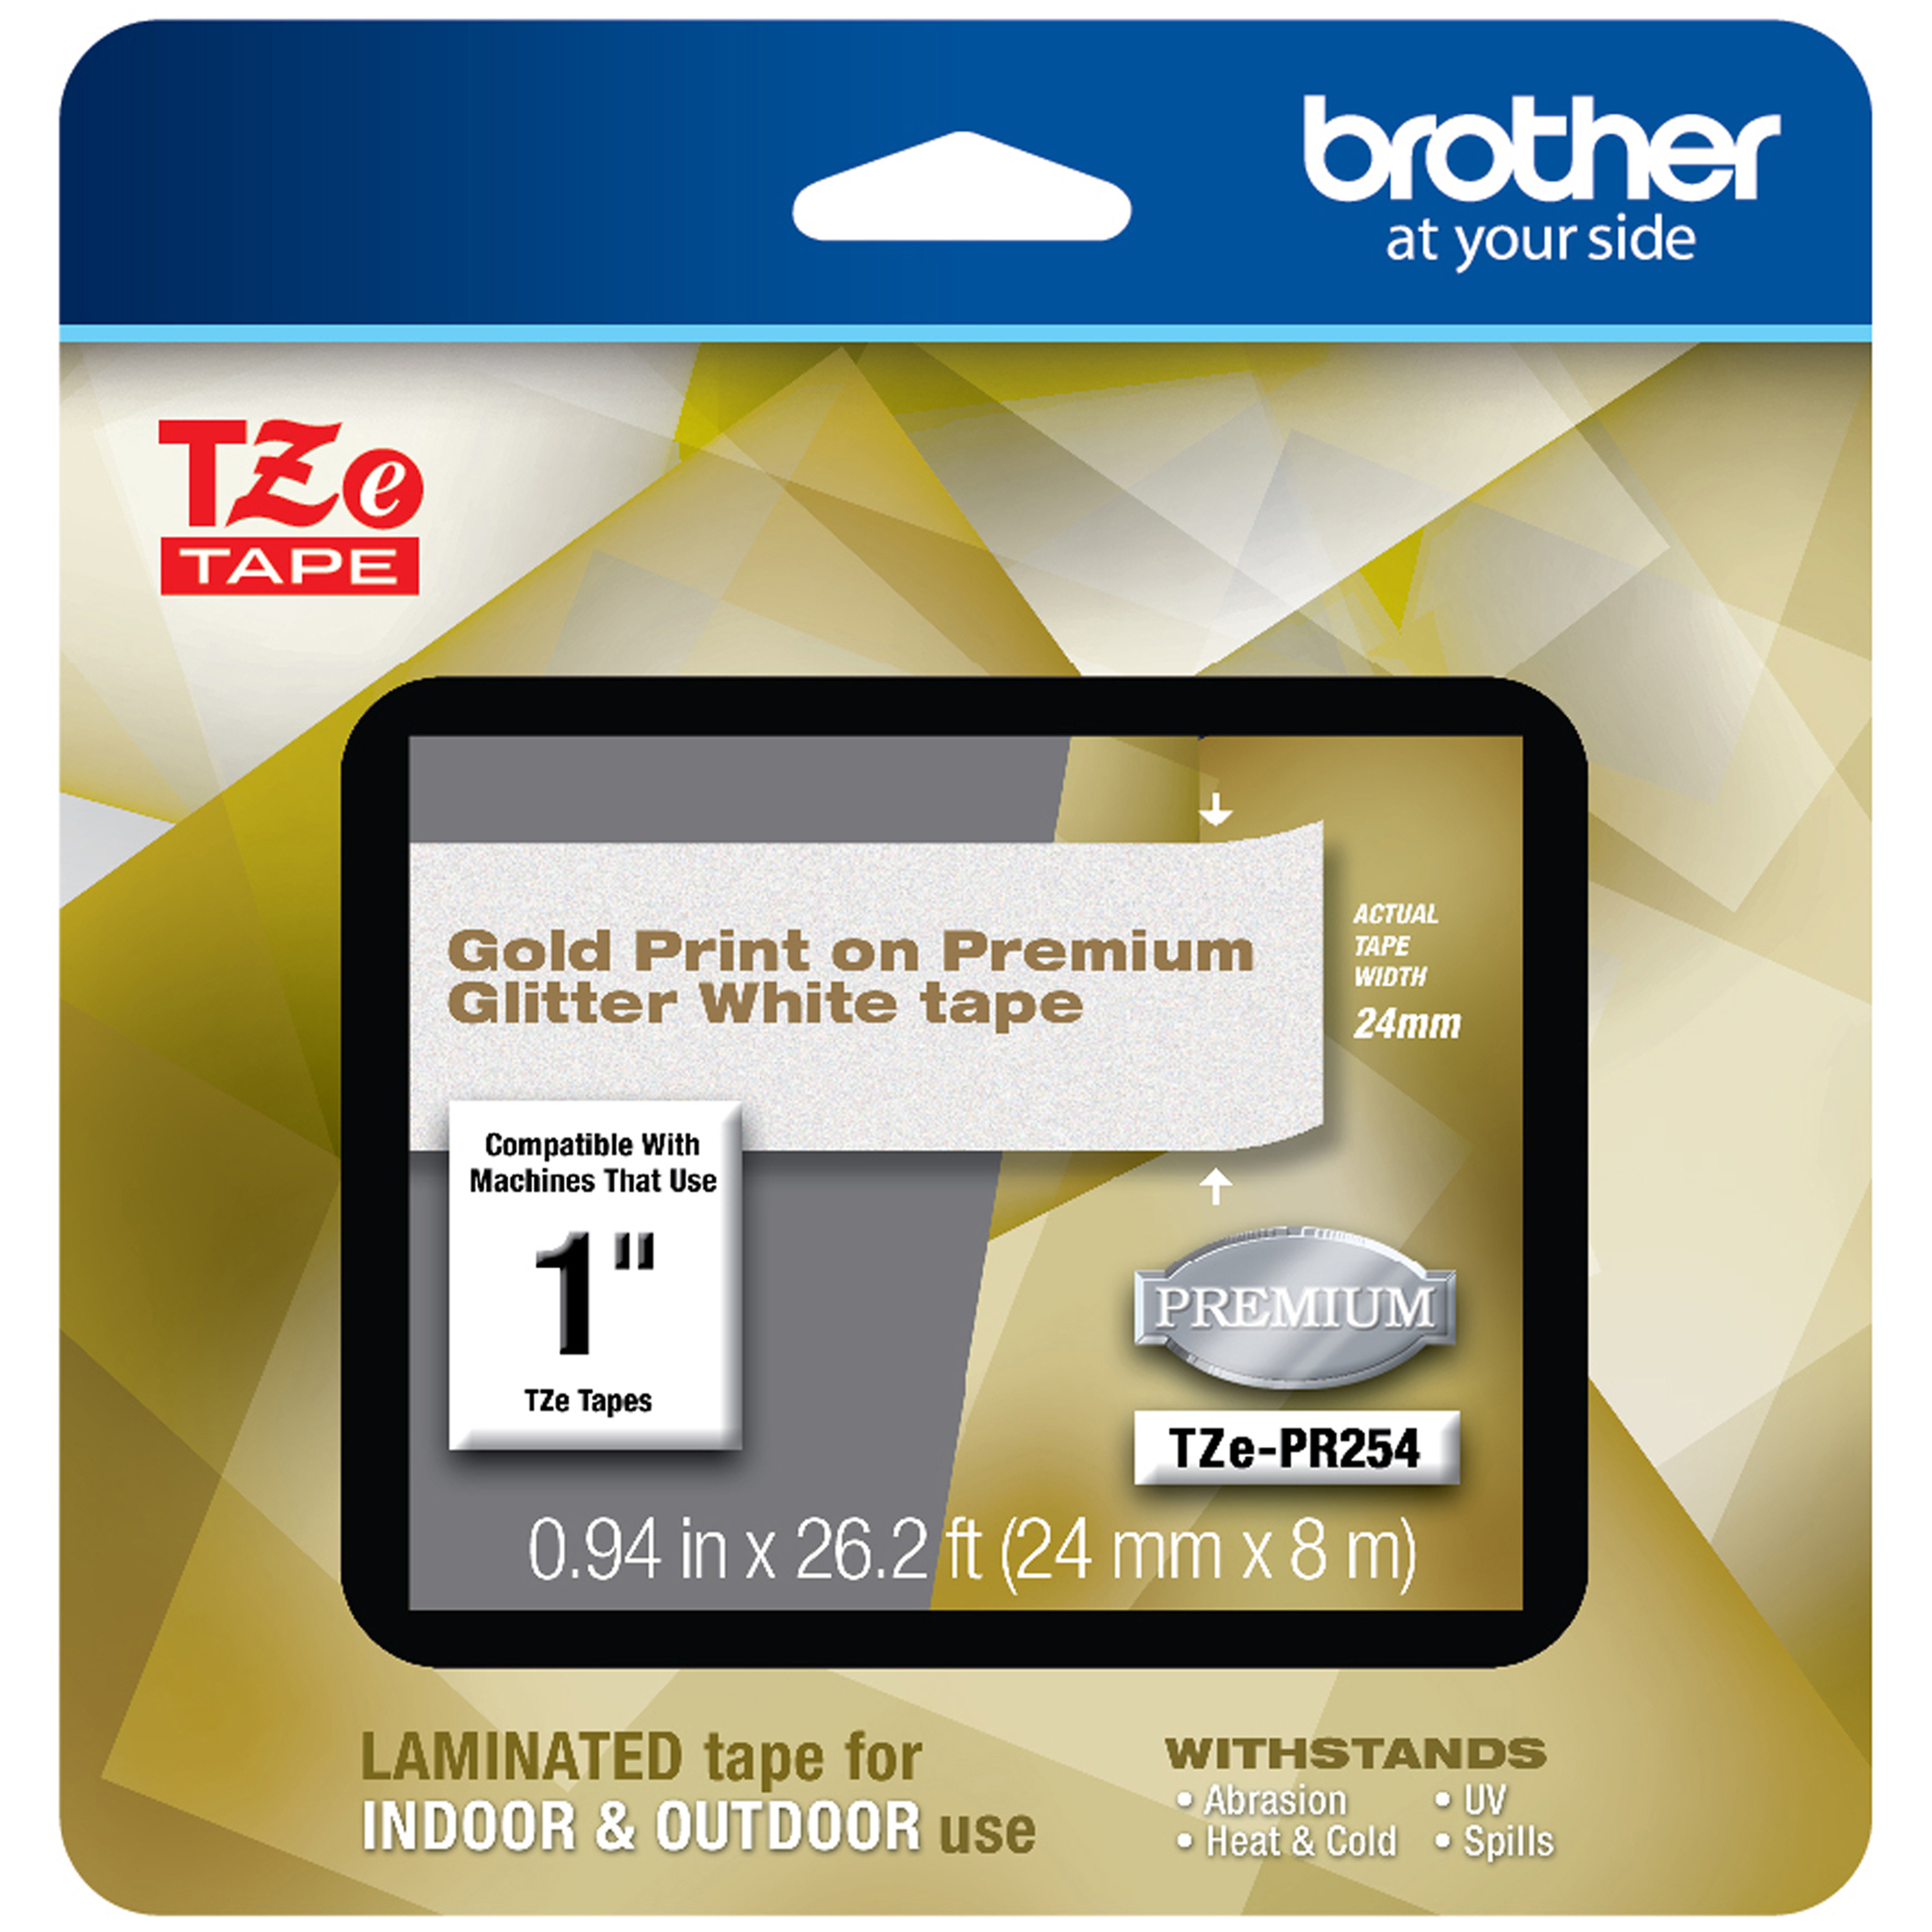  Brother TZEPR254 TZe Premium Laminated Tape, 0.94 x 26.2 ft, Gold on White (BRTTZEPR254) 